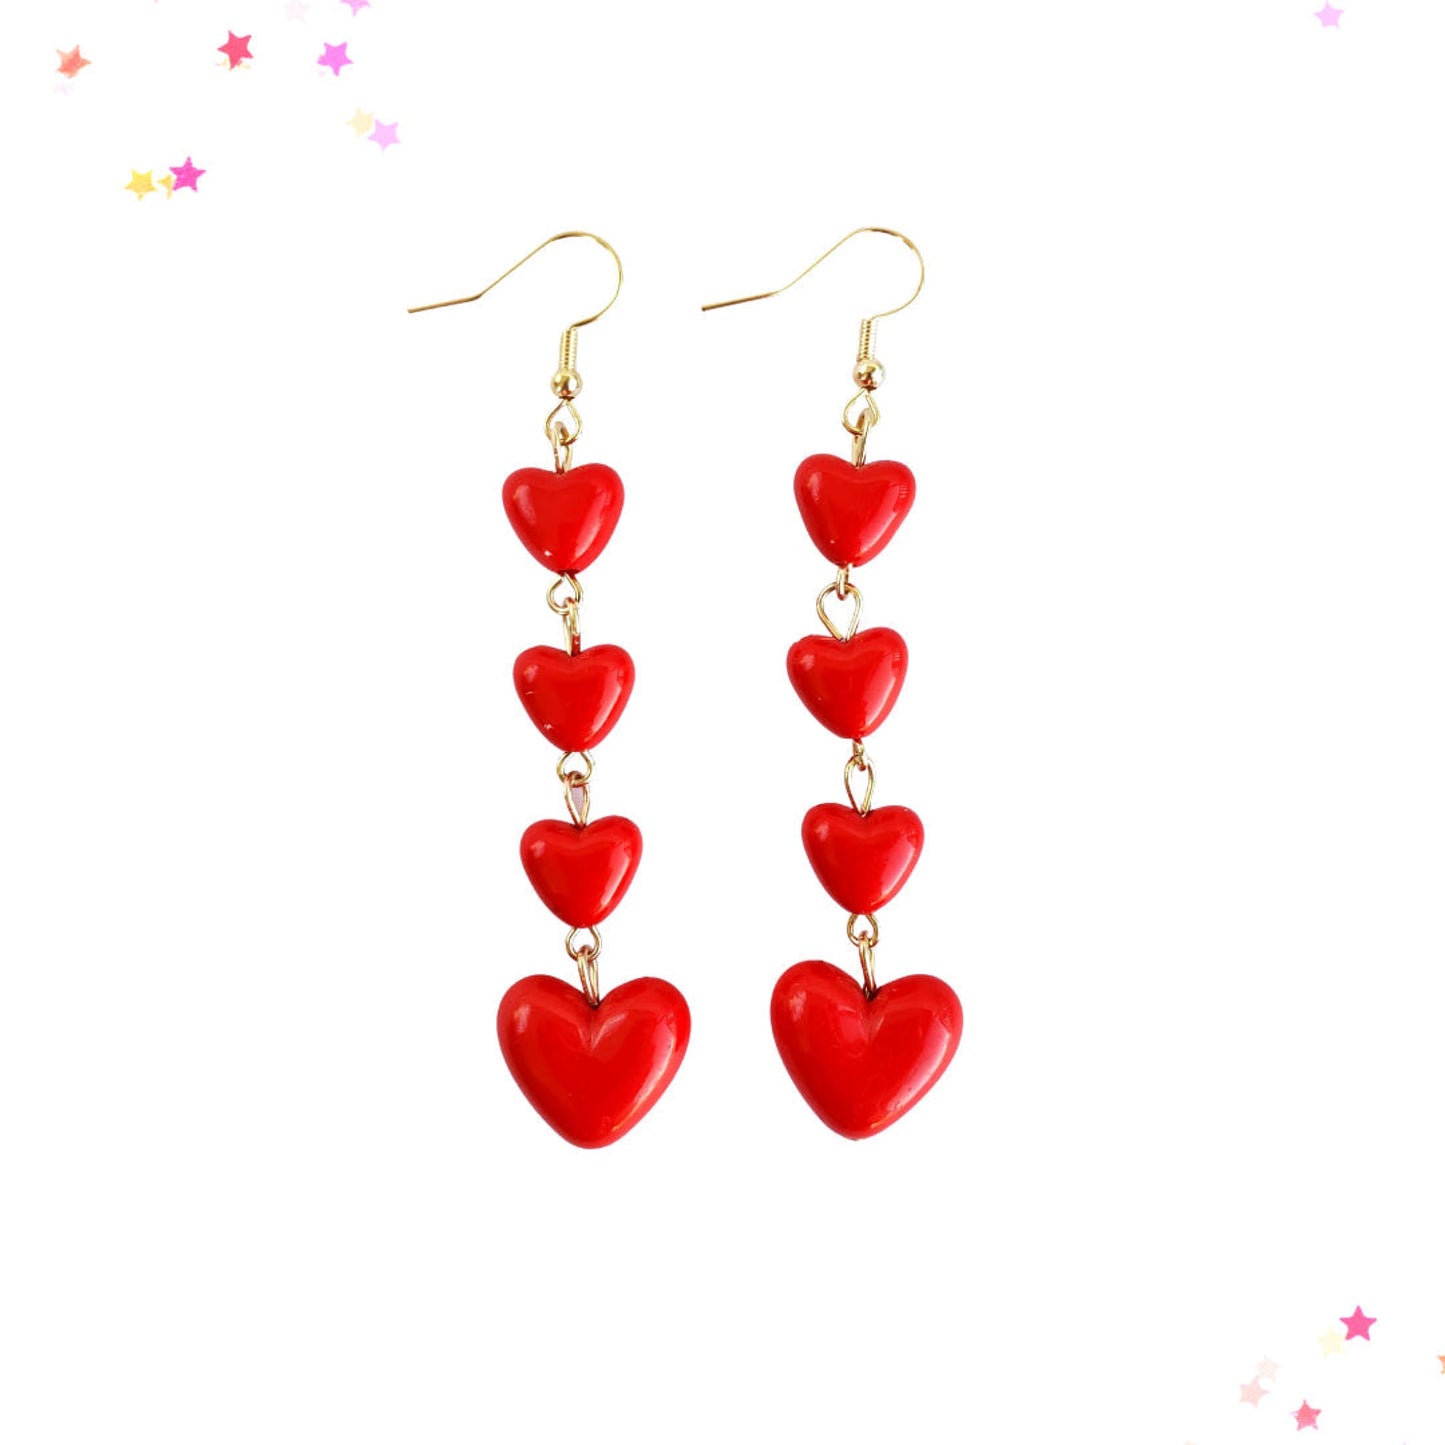 Falling in Love Red Heart Dangle Earrings from Confetti Kitty, Only 4.99